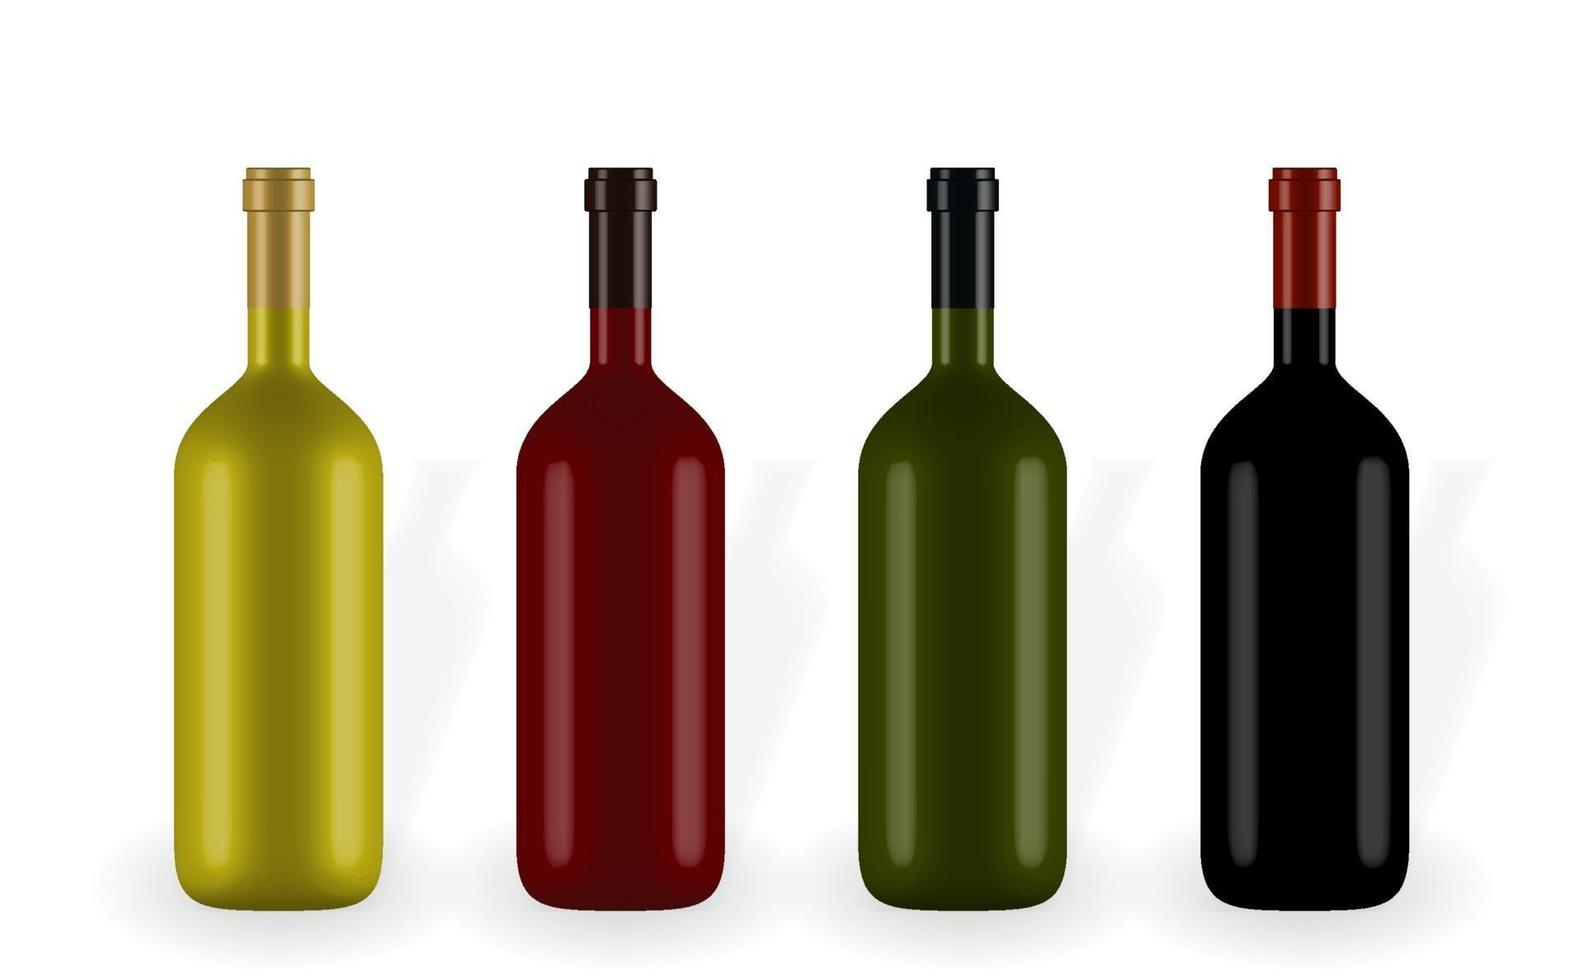 Botella de vino 3d cerrada naturalista colorida de diferentes colores sin etiqueta vector